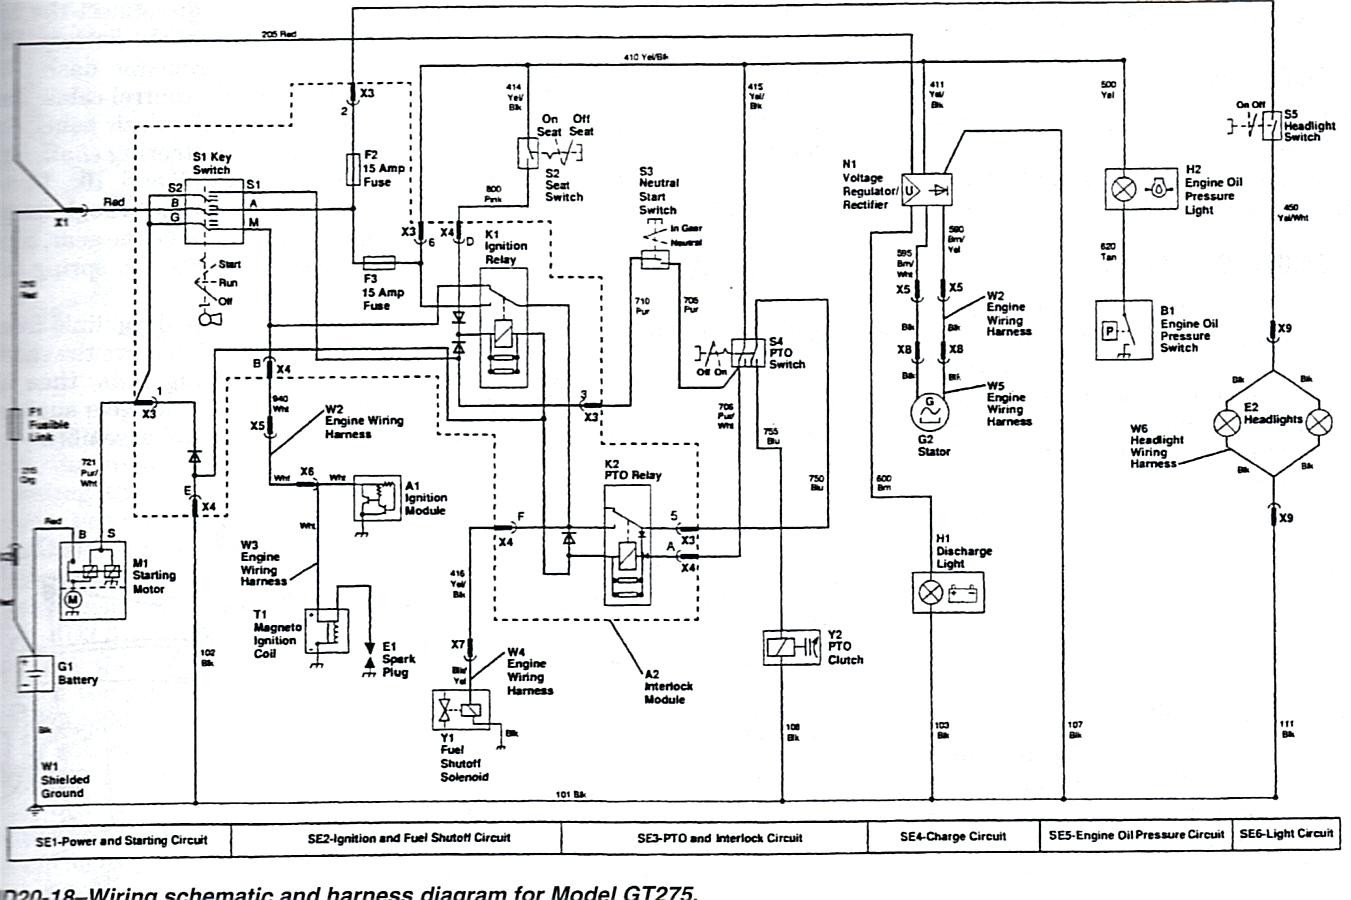 John Deere Gator 4X2 Wiring Diagram from mainetreasurechest.com